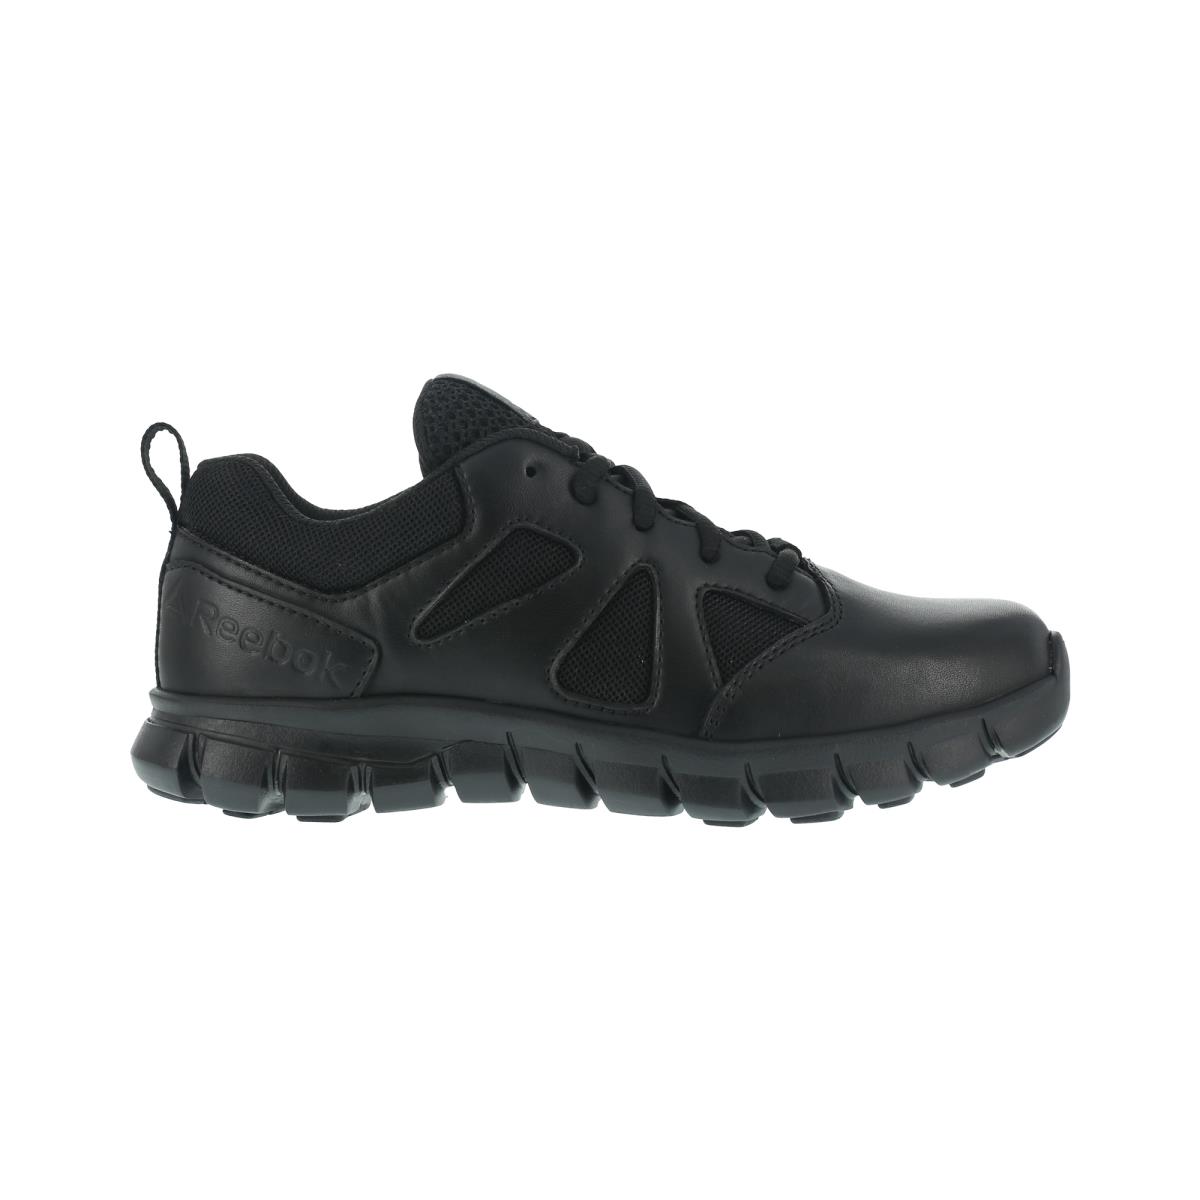 Reebok Mens Black Leather Work Shoes Soft Toe Oxfords M